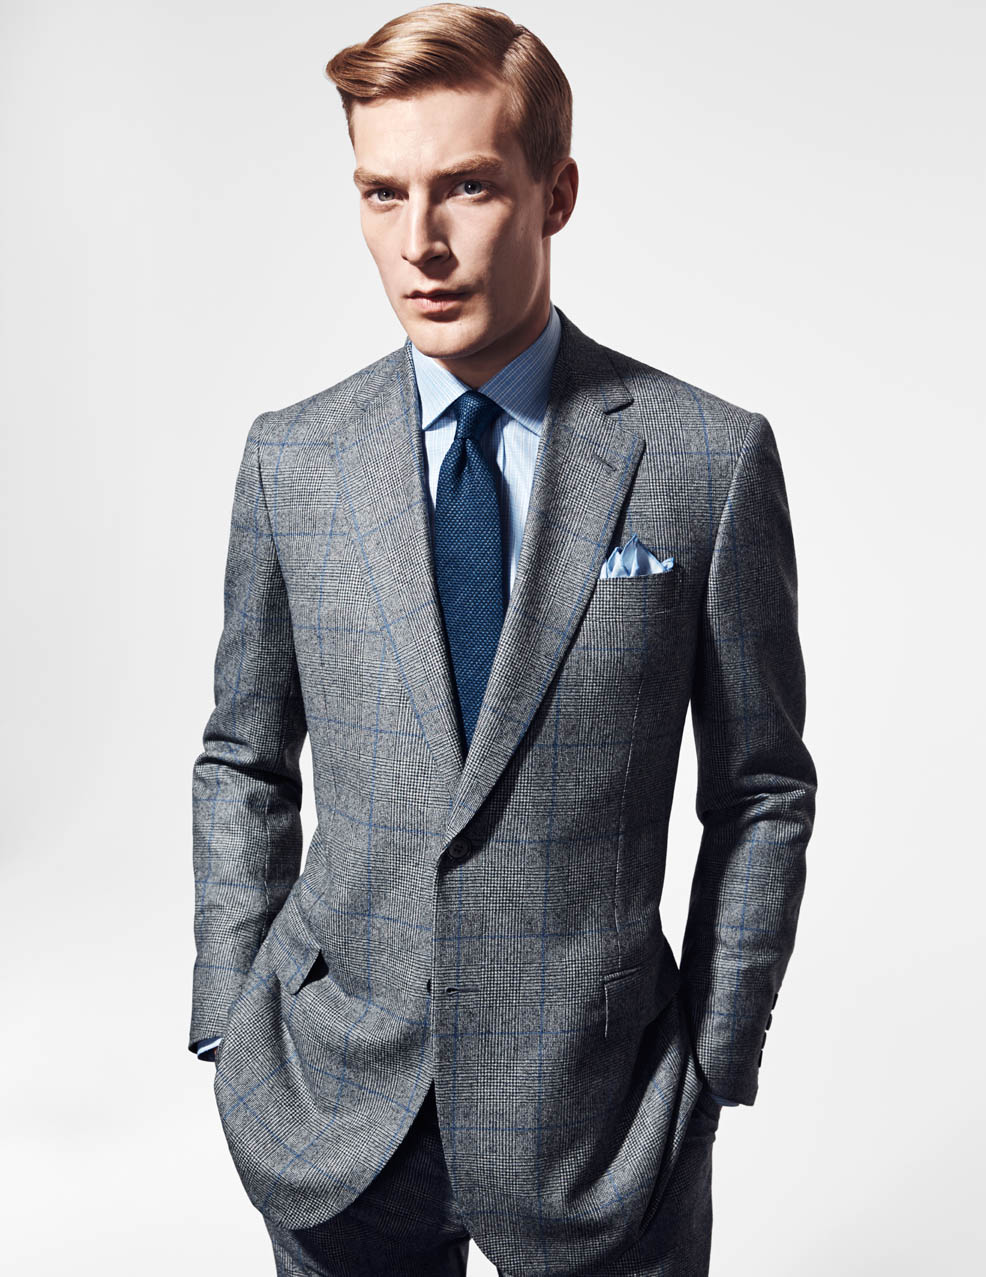 Bergdorf Goodman Fall 2015 Men’s Suiting | The Fashionisto